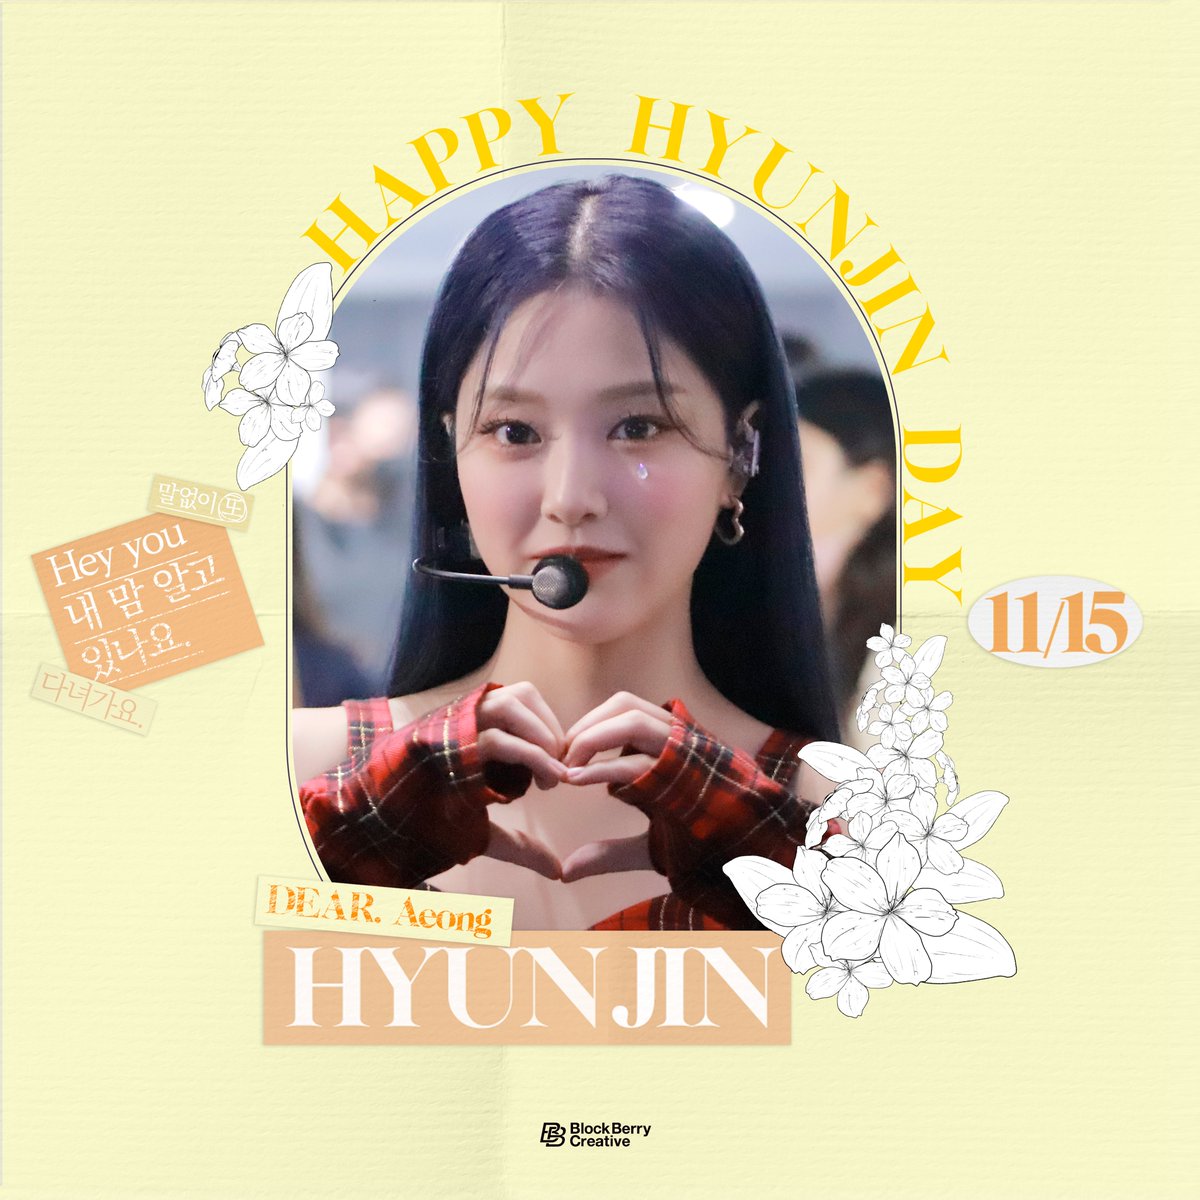 #1115_HBD_HyunJin
#Happy_HyunJin_Day

이달의 소녀의 애옹이😺
현진이의 생일을 축하합니다💛

Aeong😺 of LOOΠΔ
Happy birthday to HyunJin💛

#이달의소녀 #LOONA 
#현진 #HyunJin